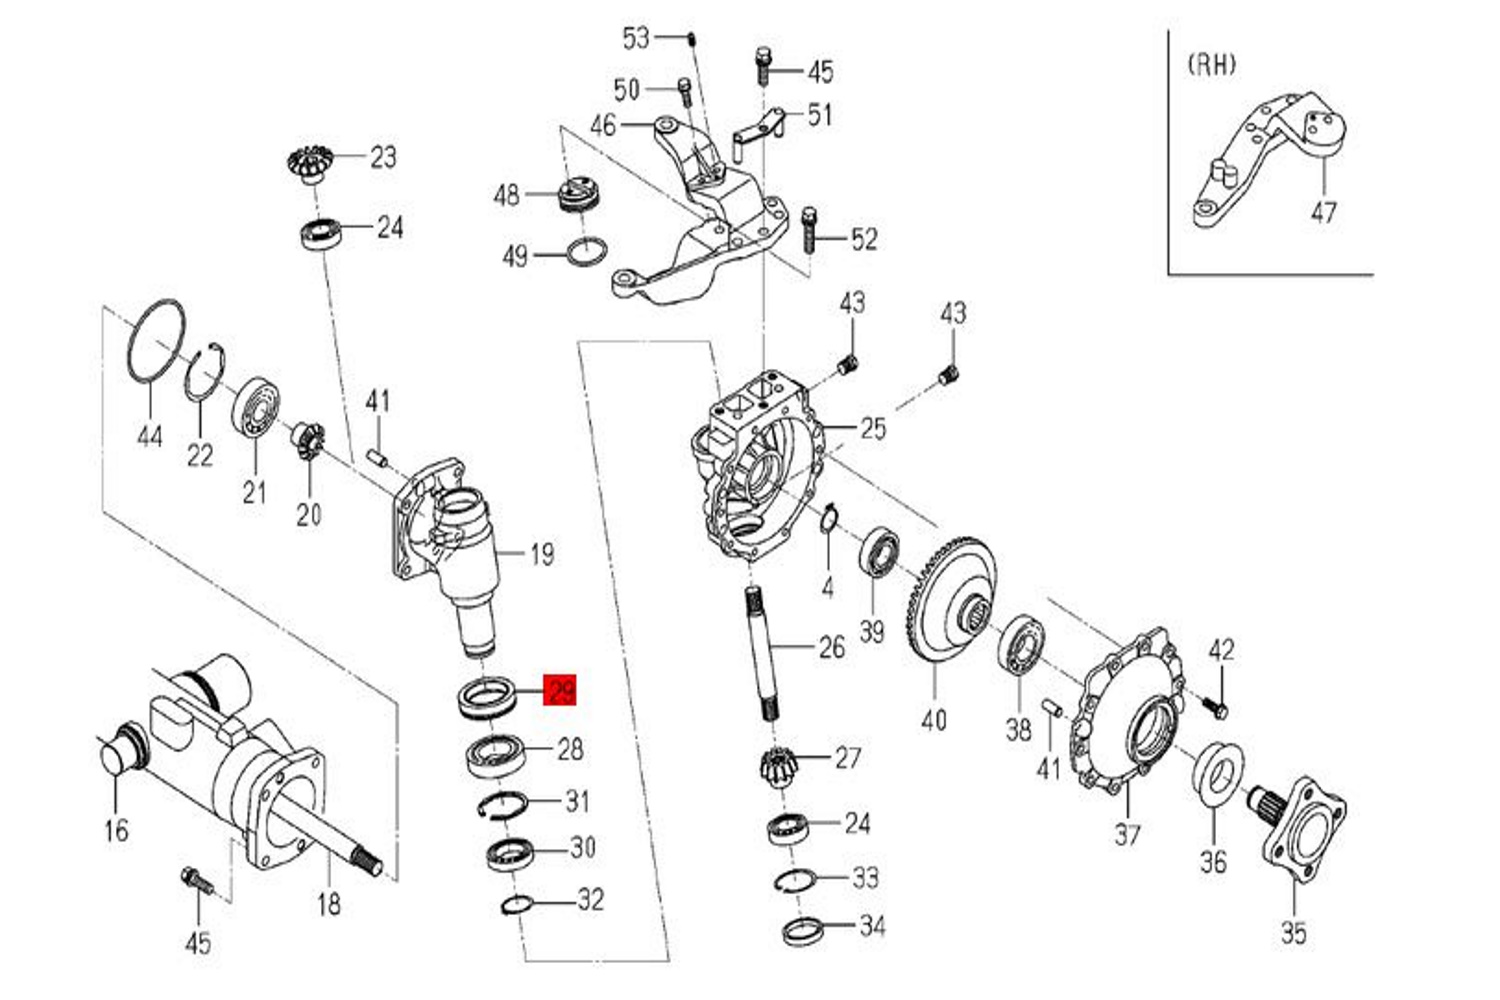 Simmering Wellendichtring Iseki Traktor Rasentraktor Vorderachse Original | 1685-434-001-00 - 2